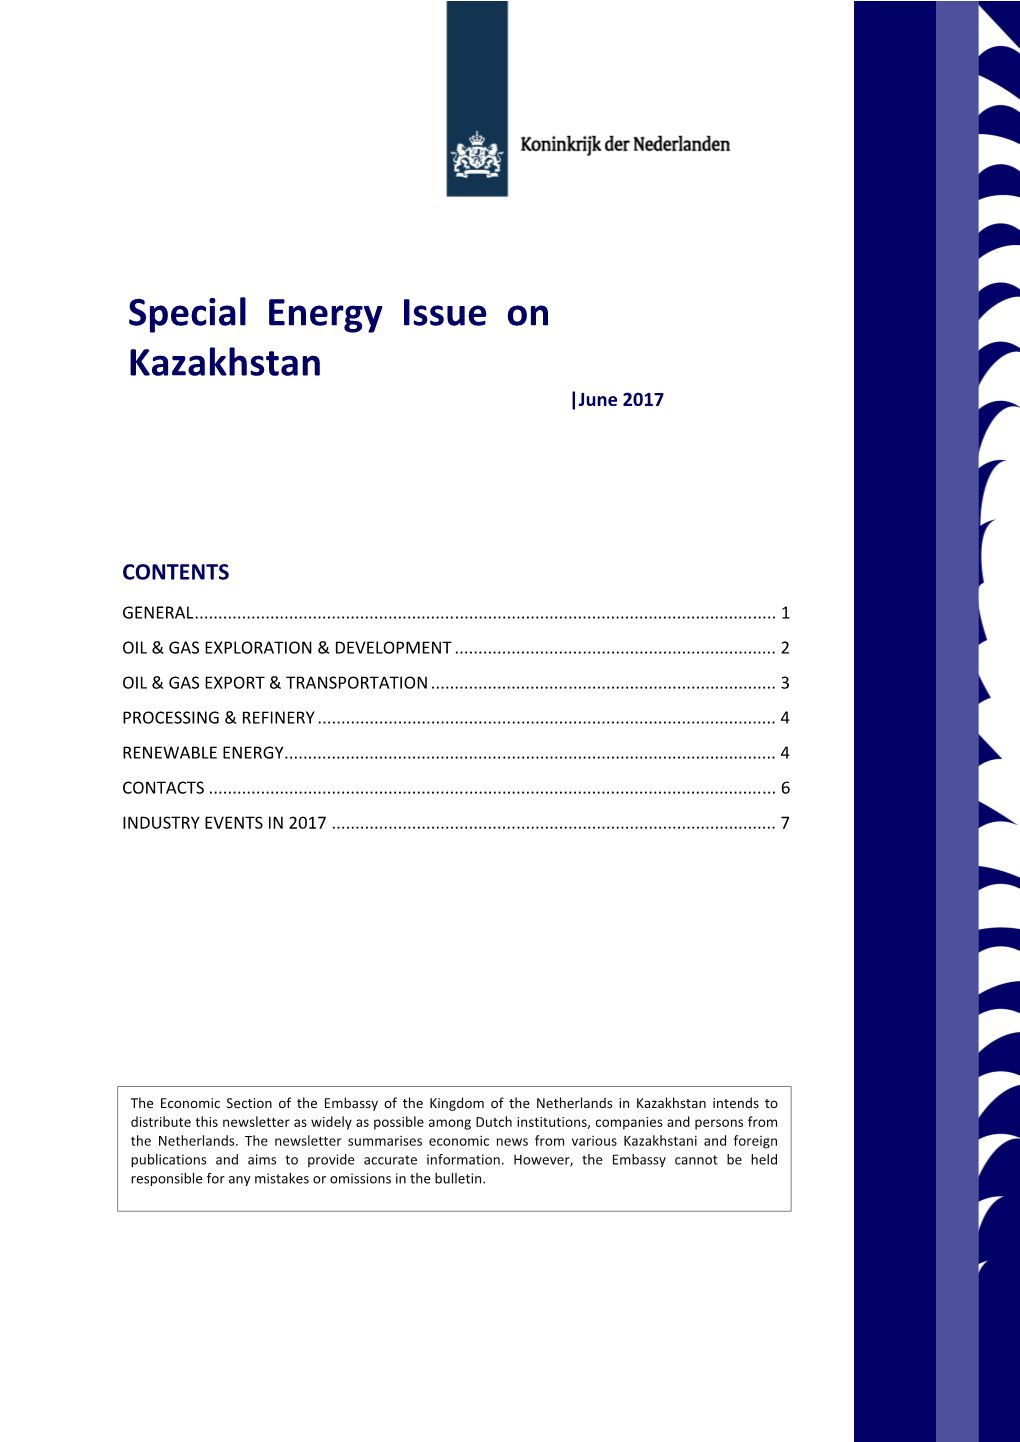 Special Energy Issue on Kazakhstan |June 2017